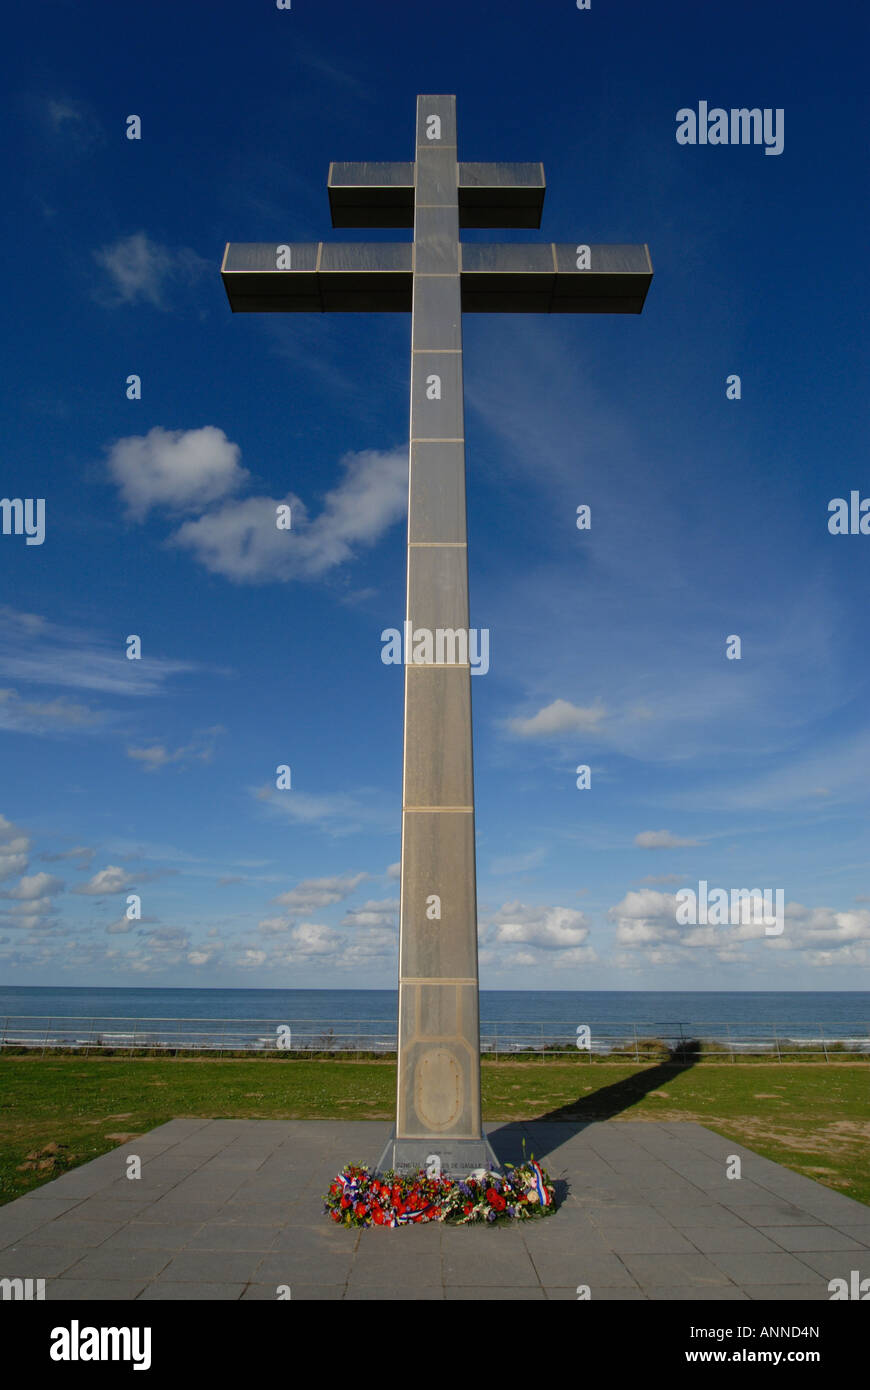 Cross of Lorraine Memorial commemorating return of General de Gaulle, D-Day landing beach, Normandy, France Stock Photo